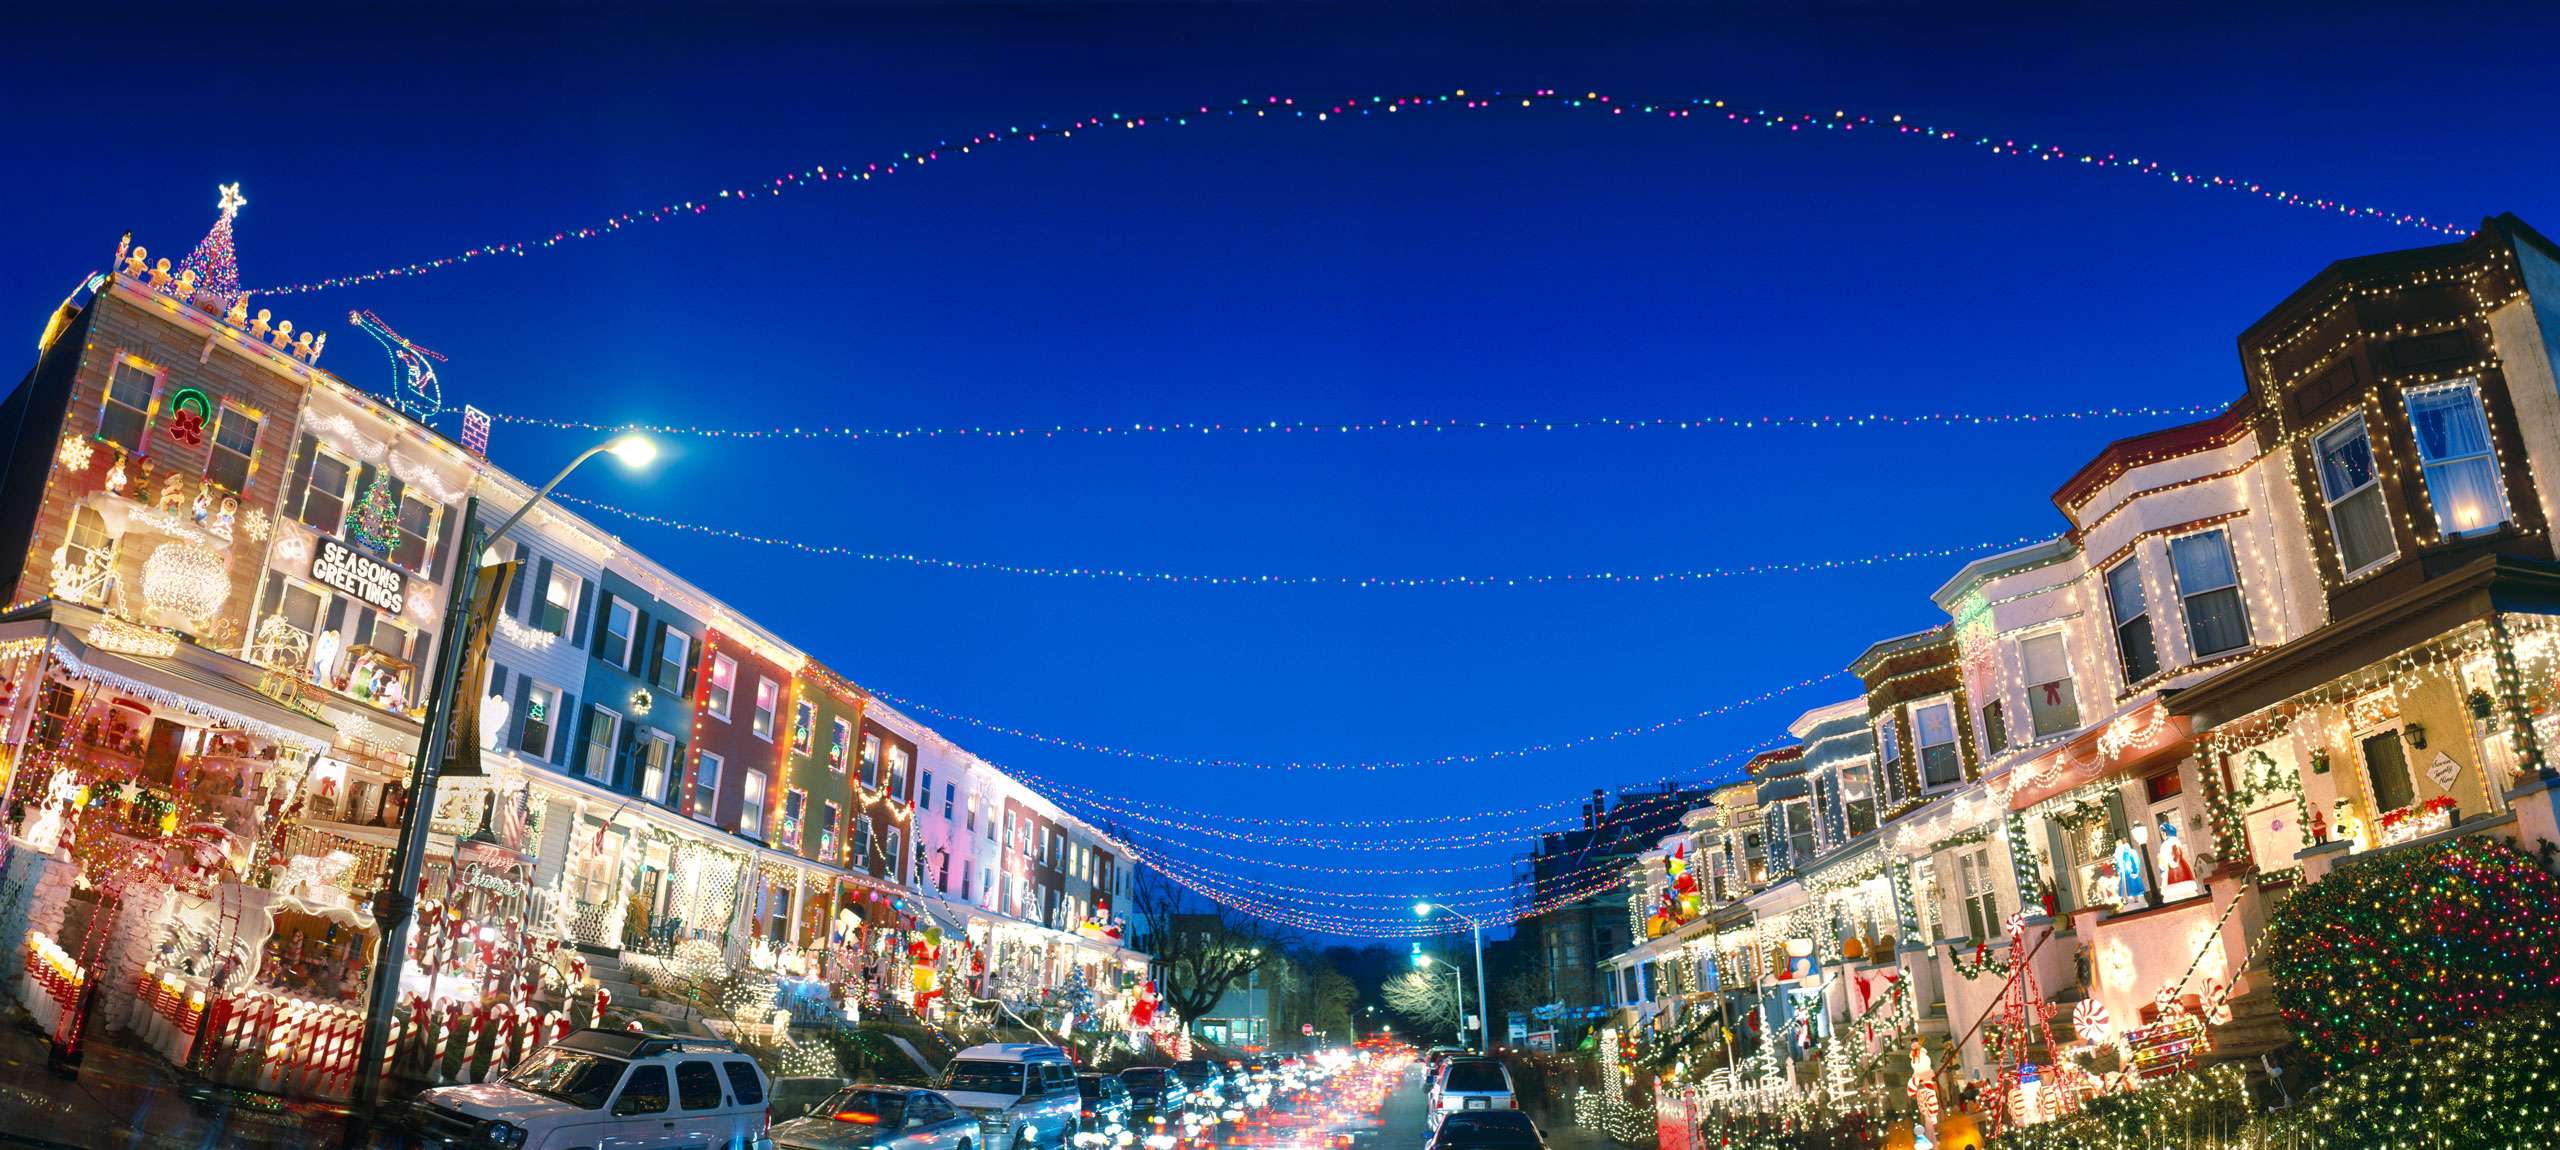 PORTFOLIO - Baltimore - Neighborhoods   #17  Houses with Christmas Decorations, 34th Street Hampden